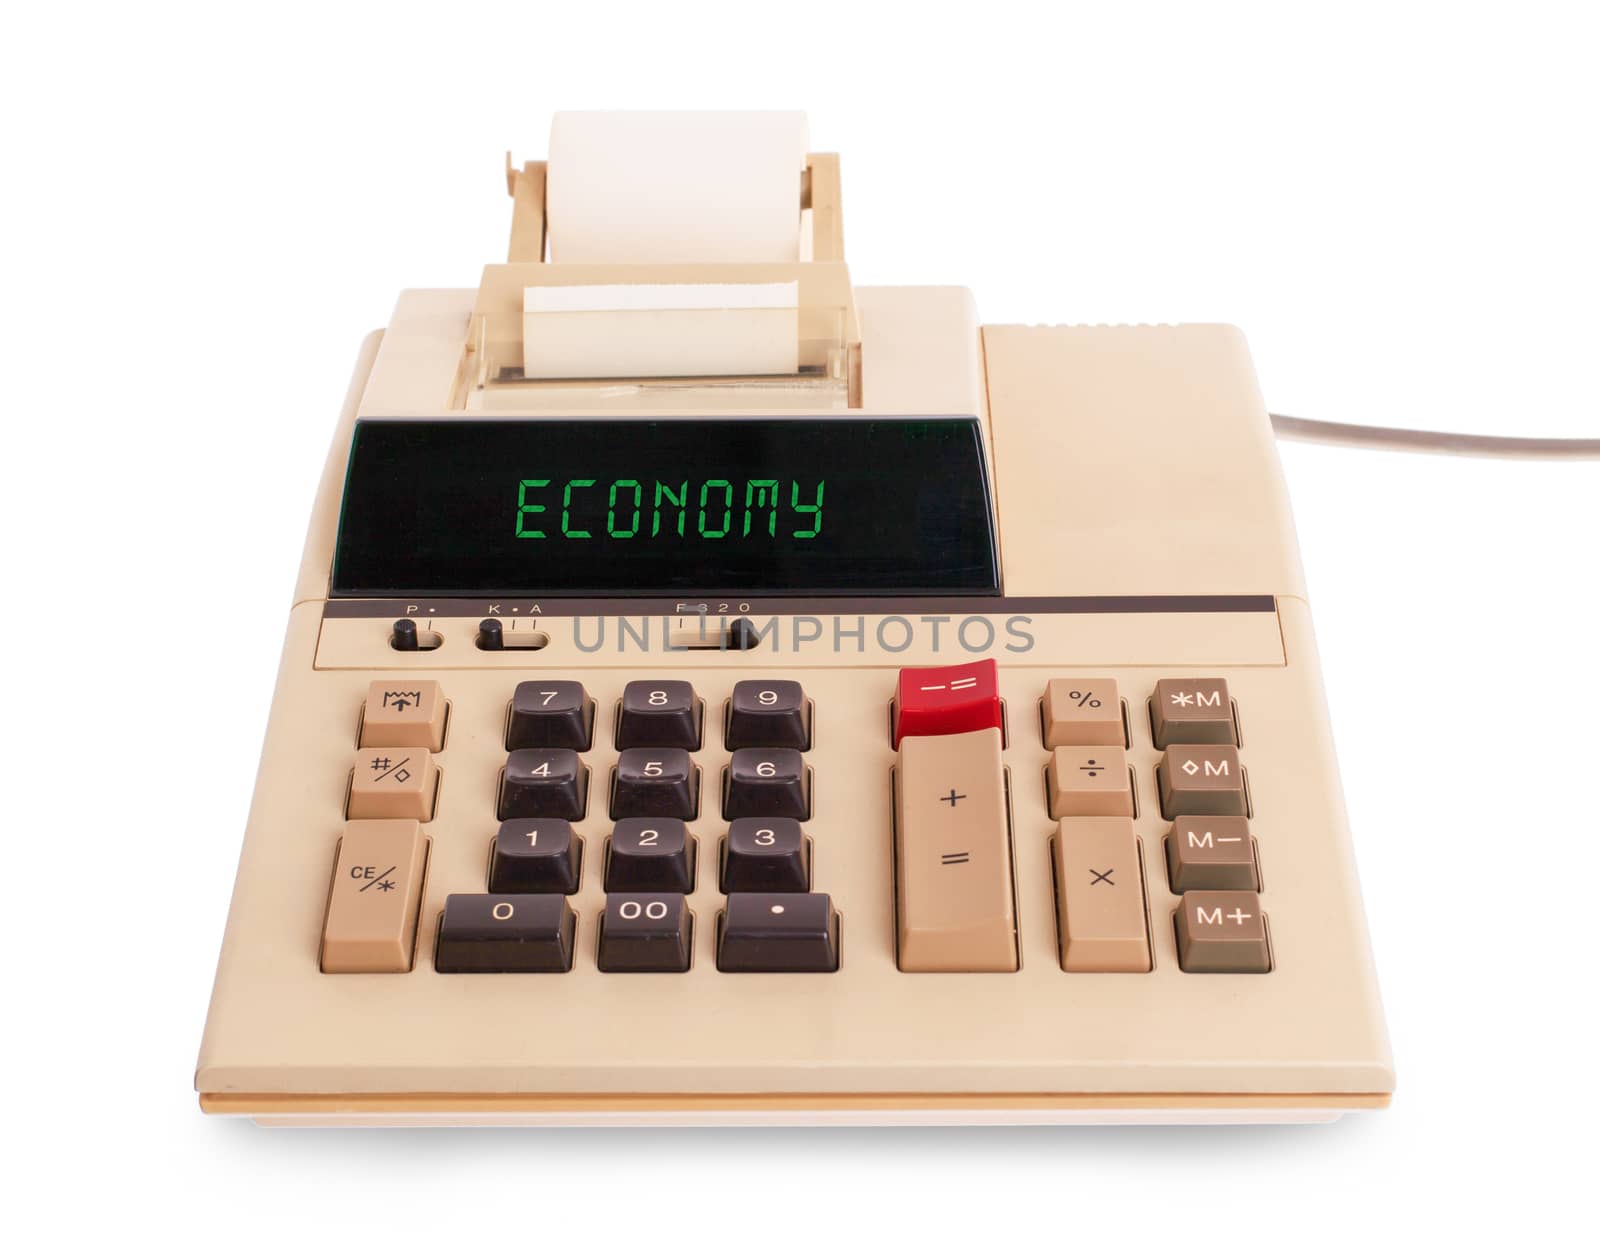 Old calculator - economics by michaklootwijk